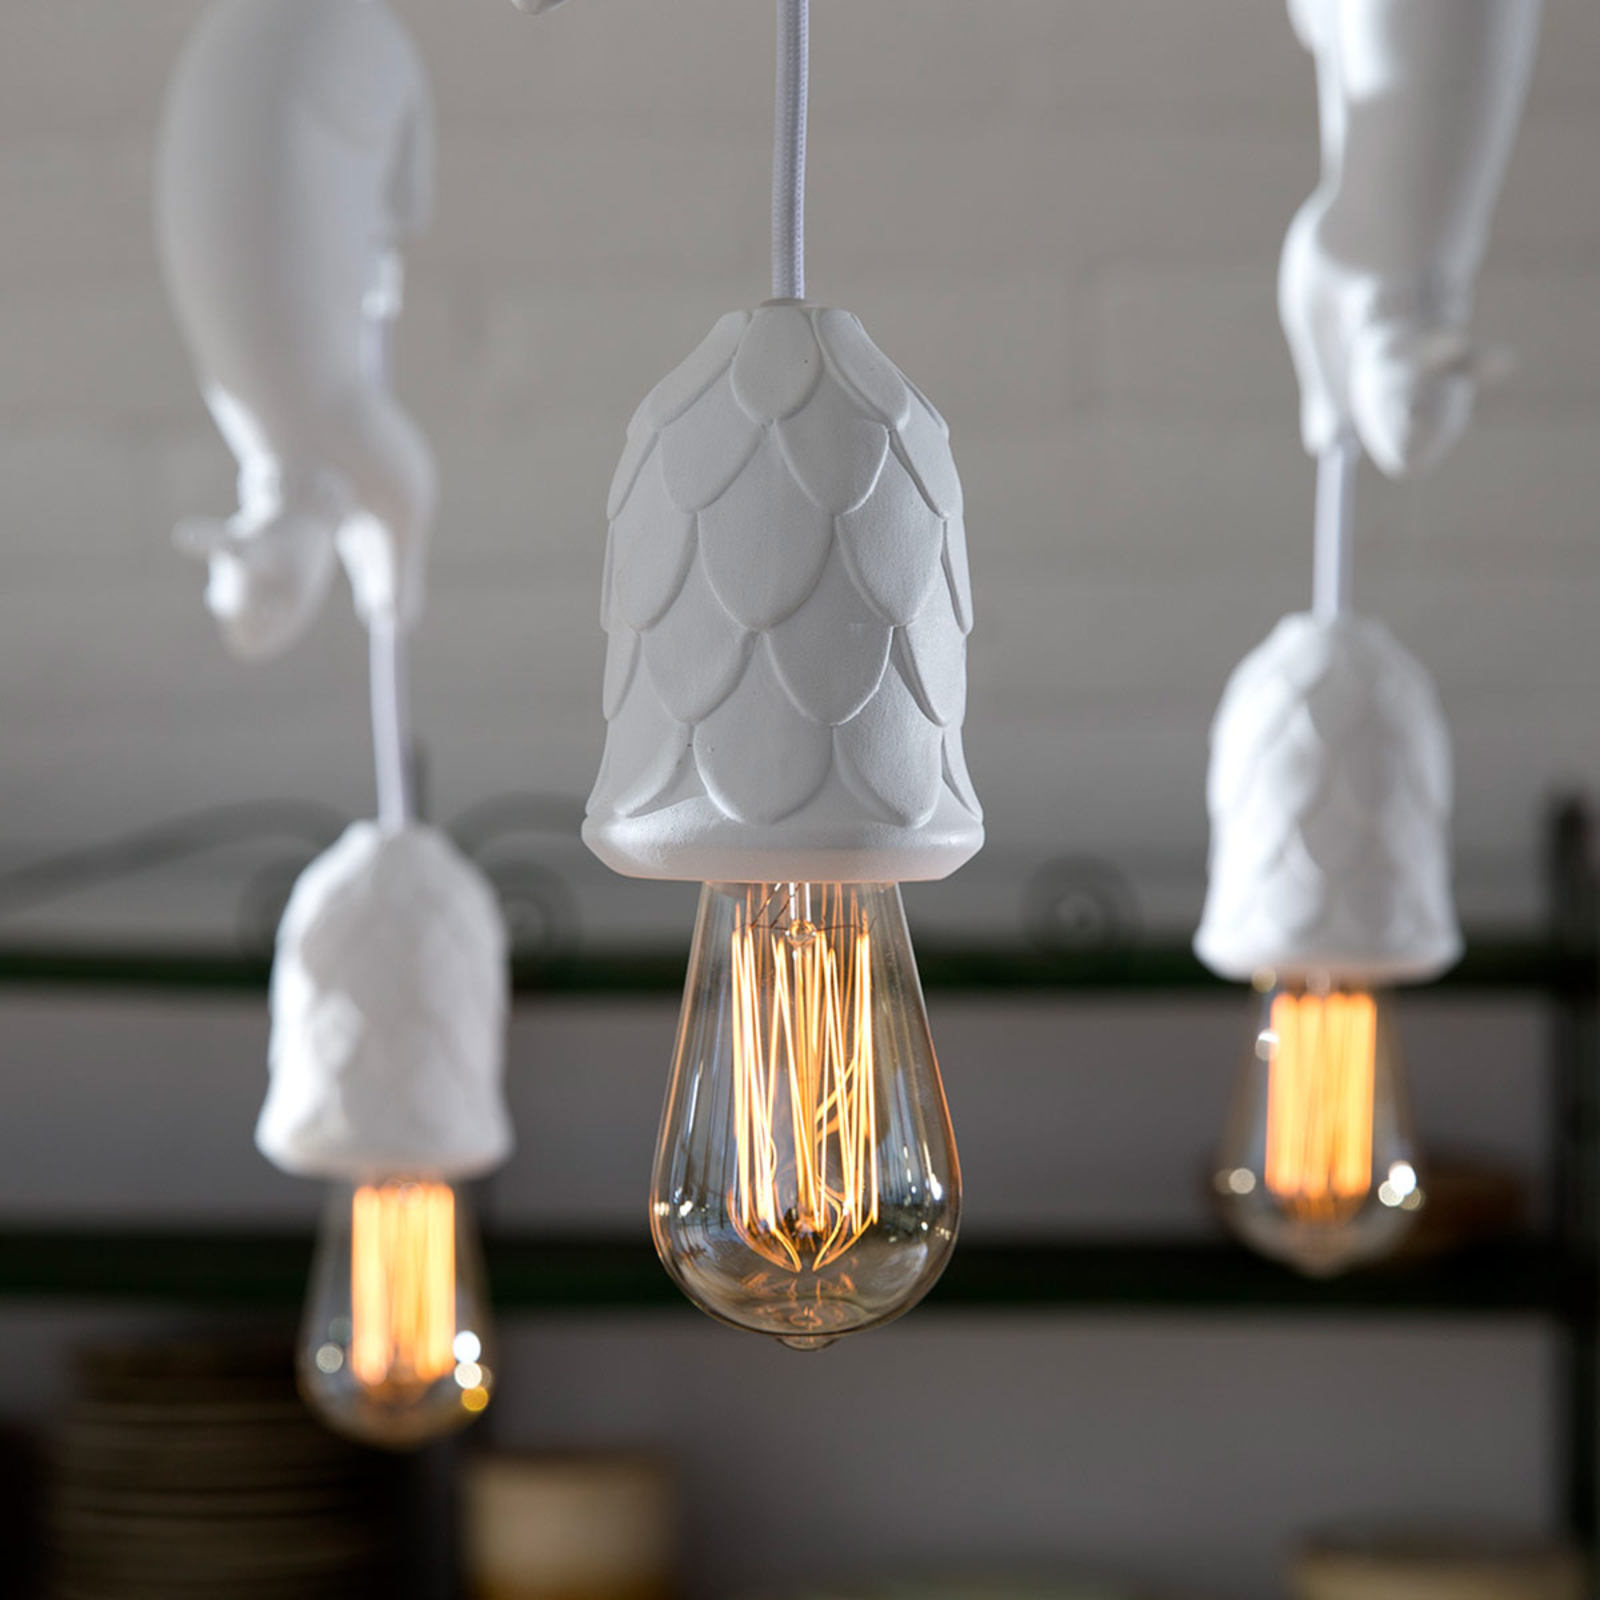 Karman Sherwood e Robin - designer függő lámpa